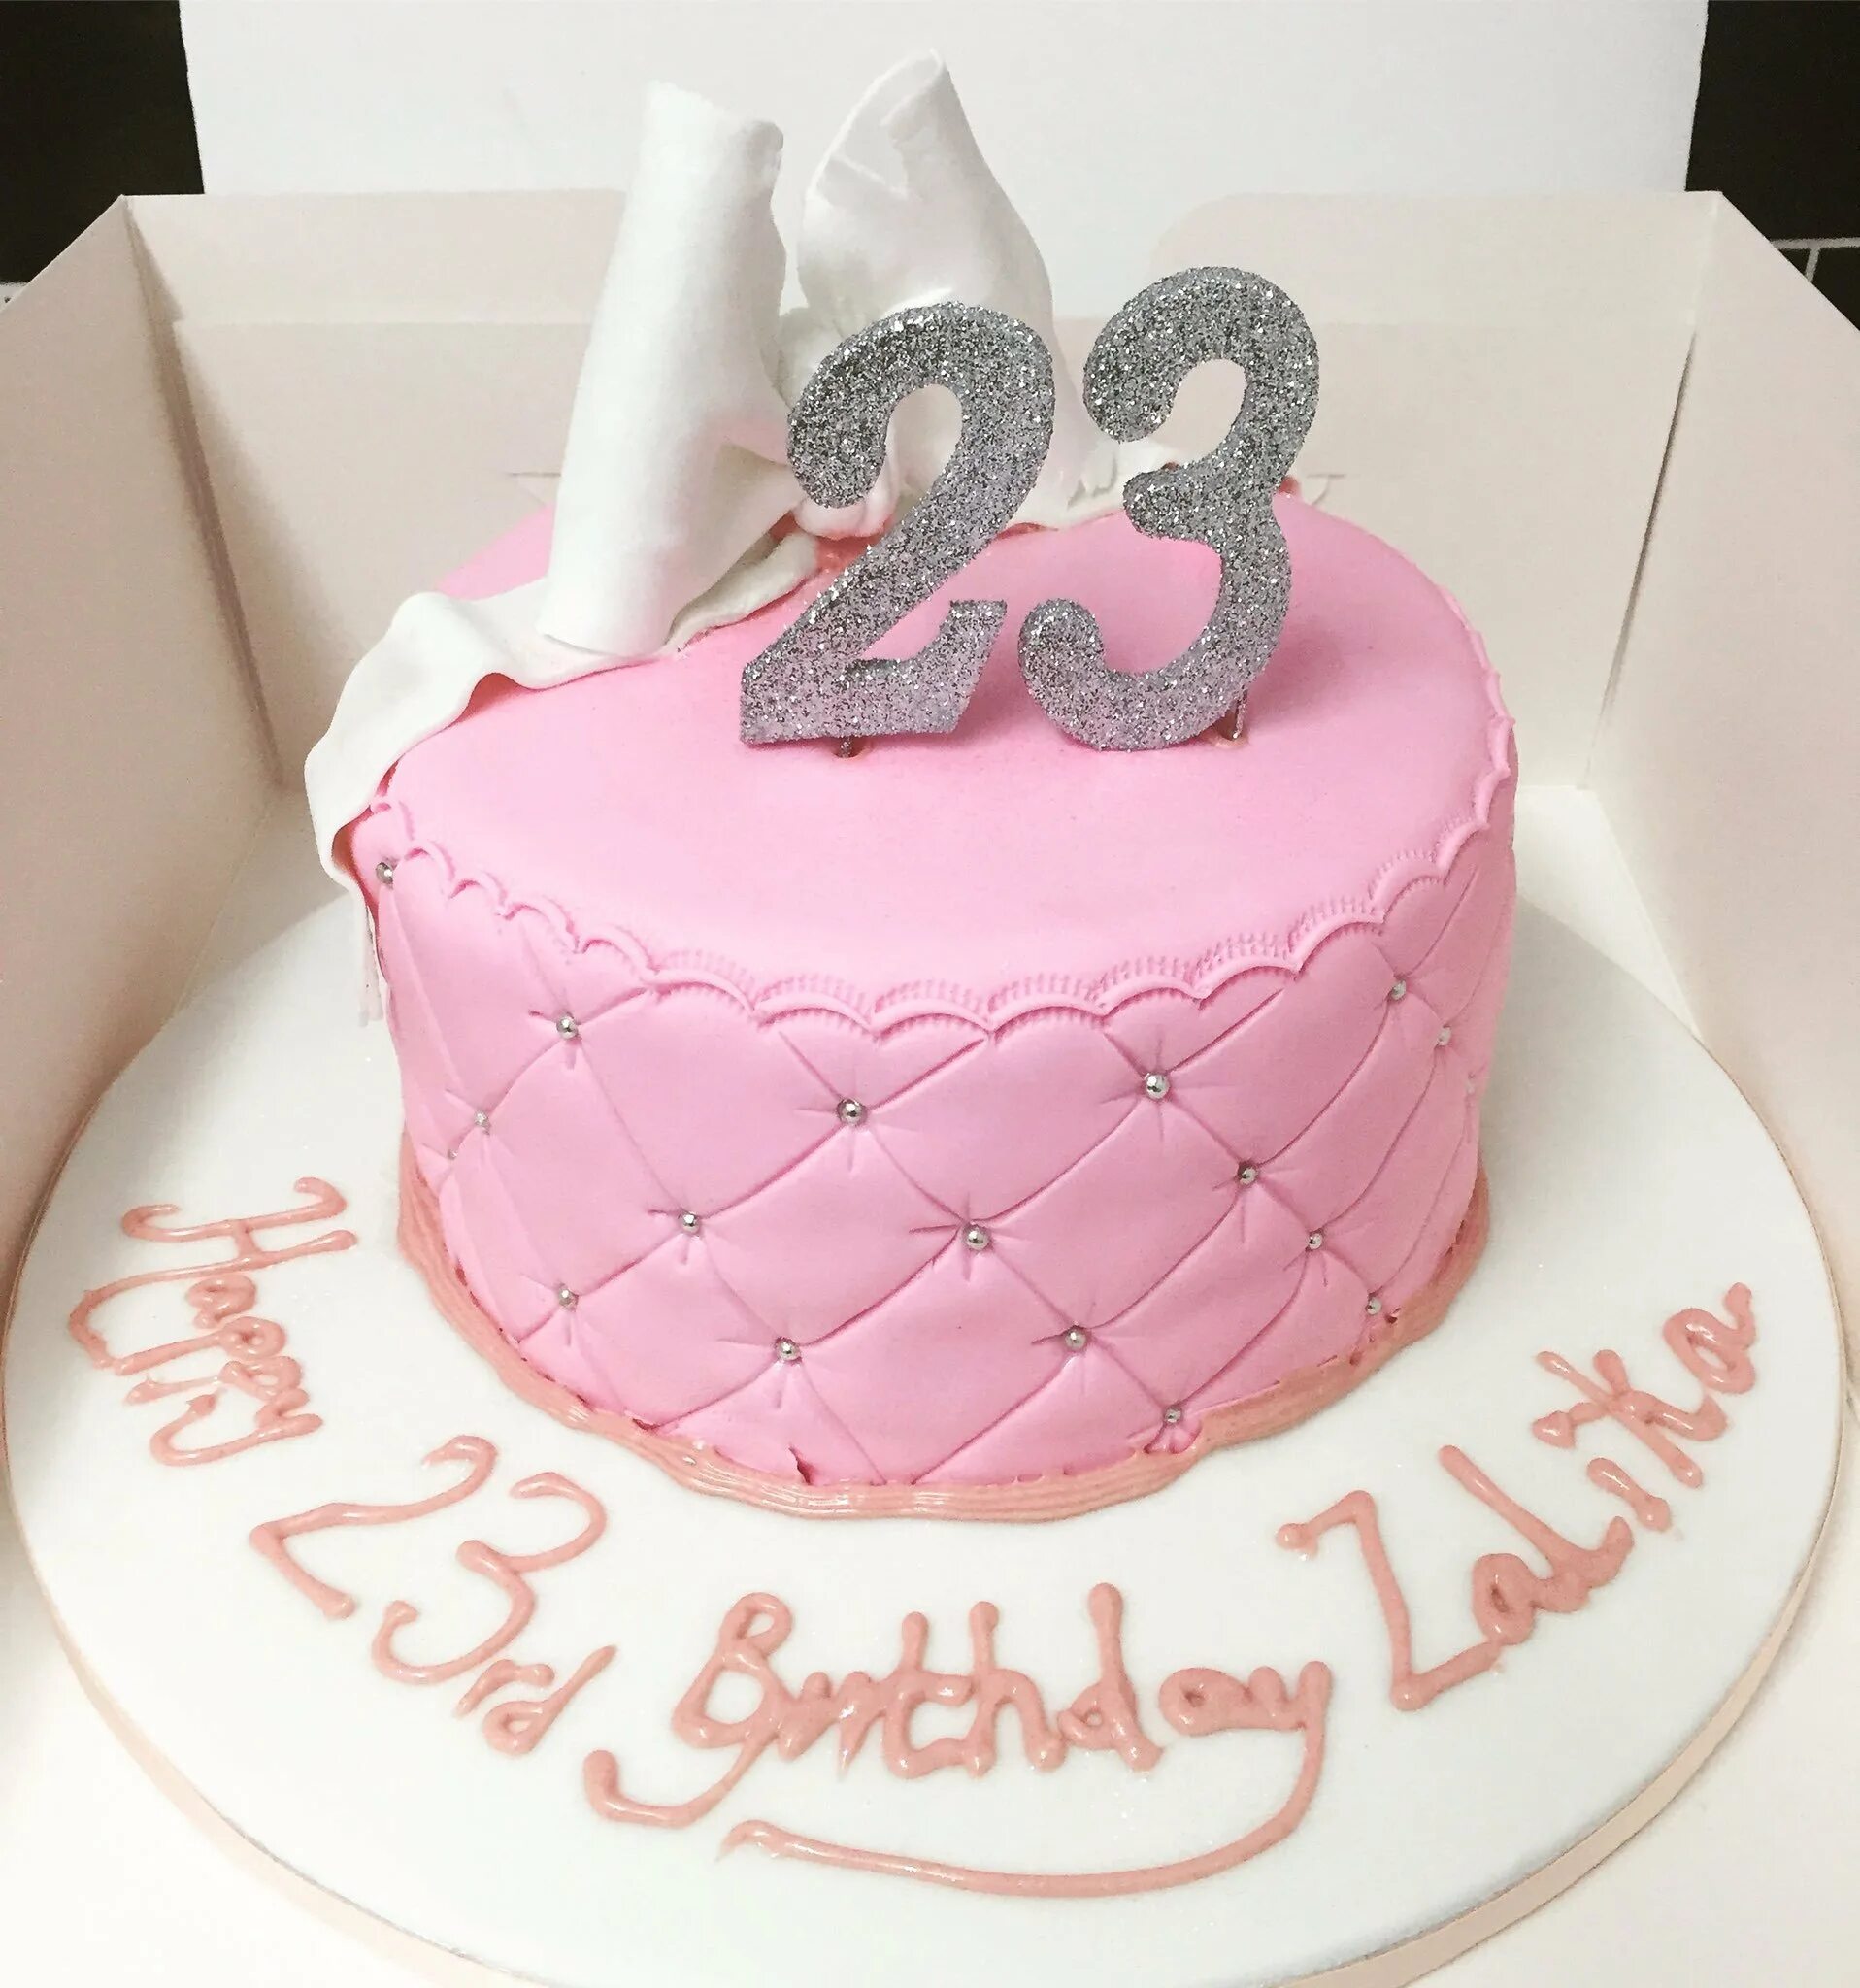 Торт девушке 22. Торт для девушки. Торт на день рождения девушке. Торт для девушки 29 лет на день рождения. Торт для девочки 23 года.